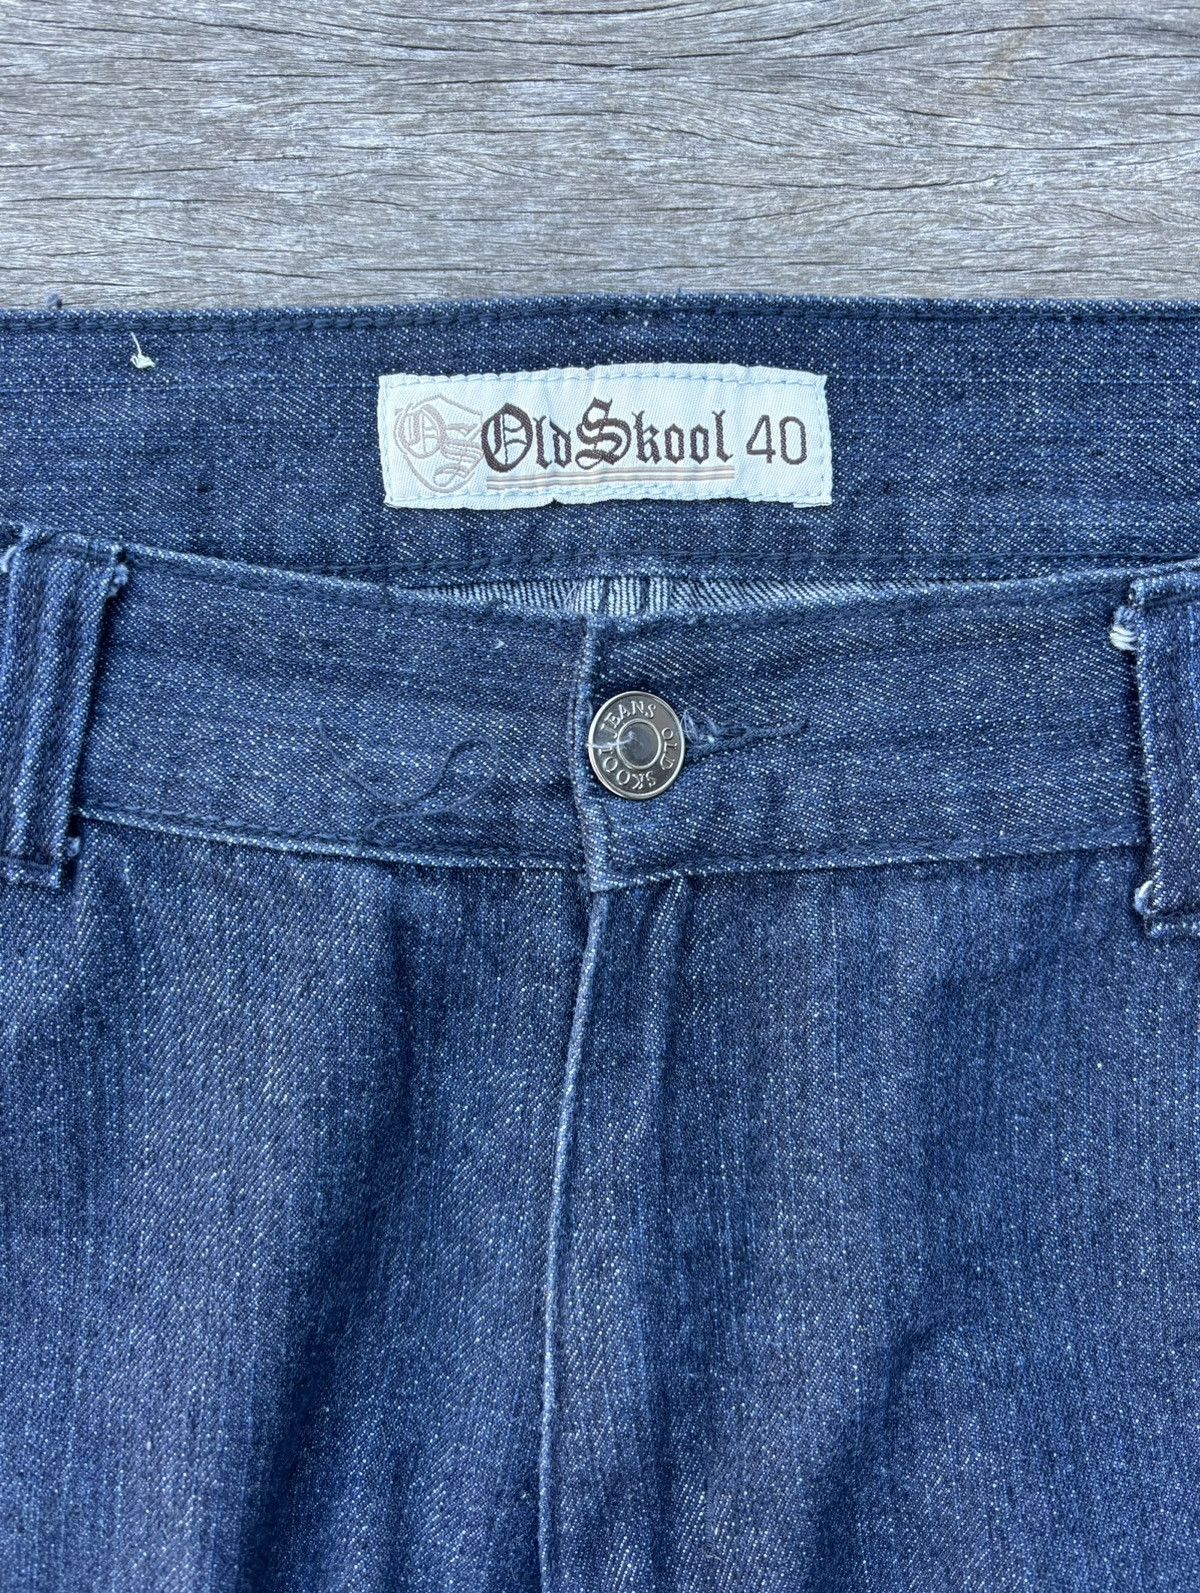 Vintage Vintage Old Skool Baggy Denim Jeans Size US 40 / EU 56 - 4 Thumbnail